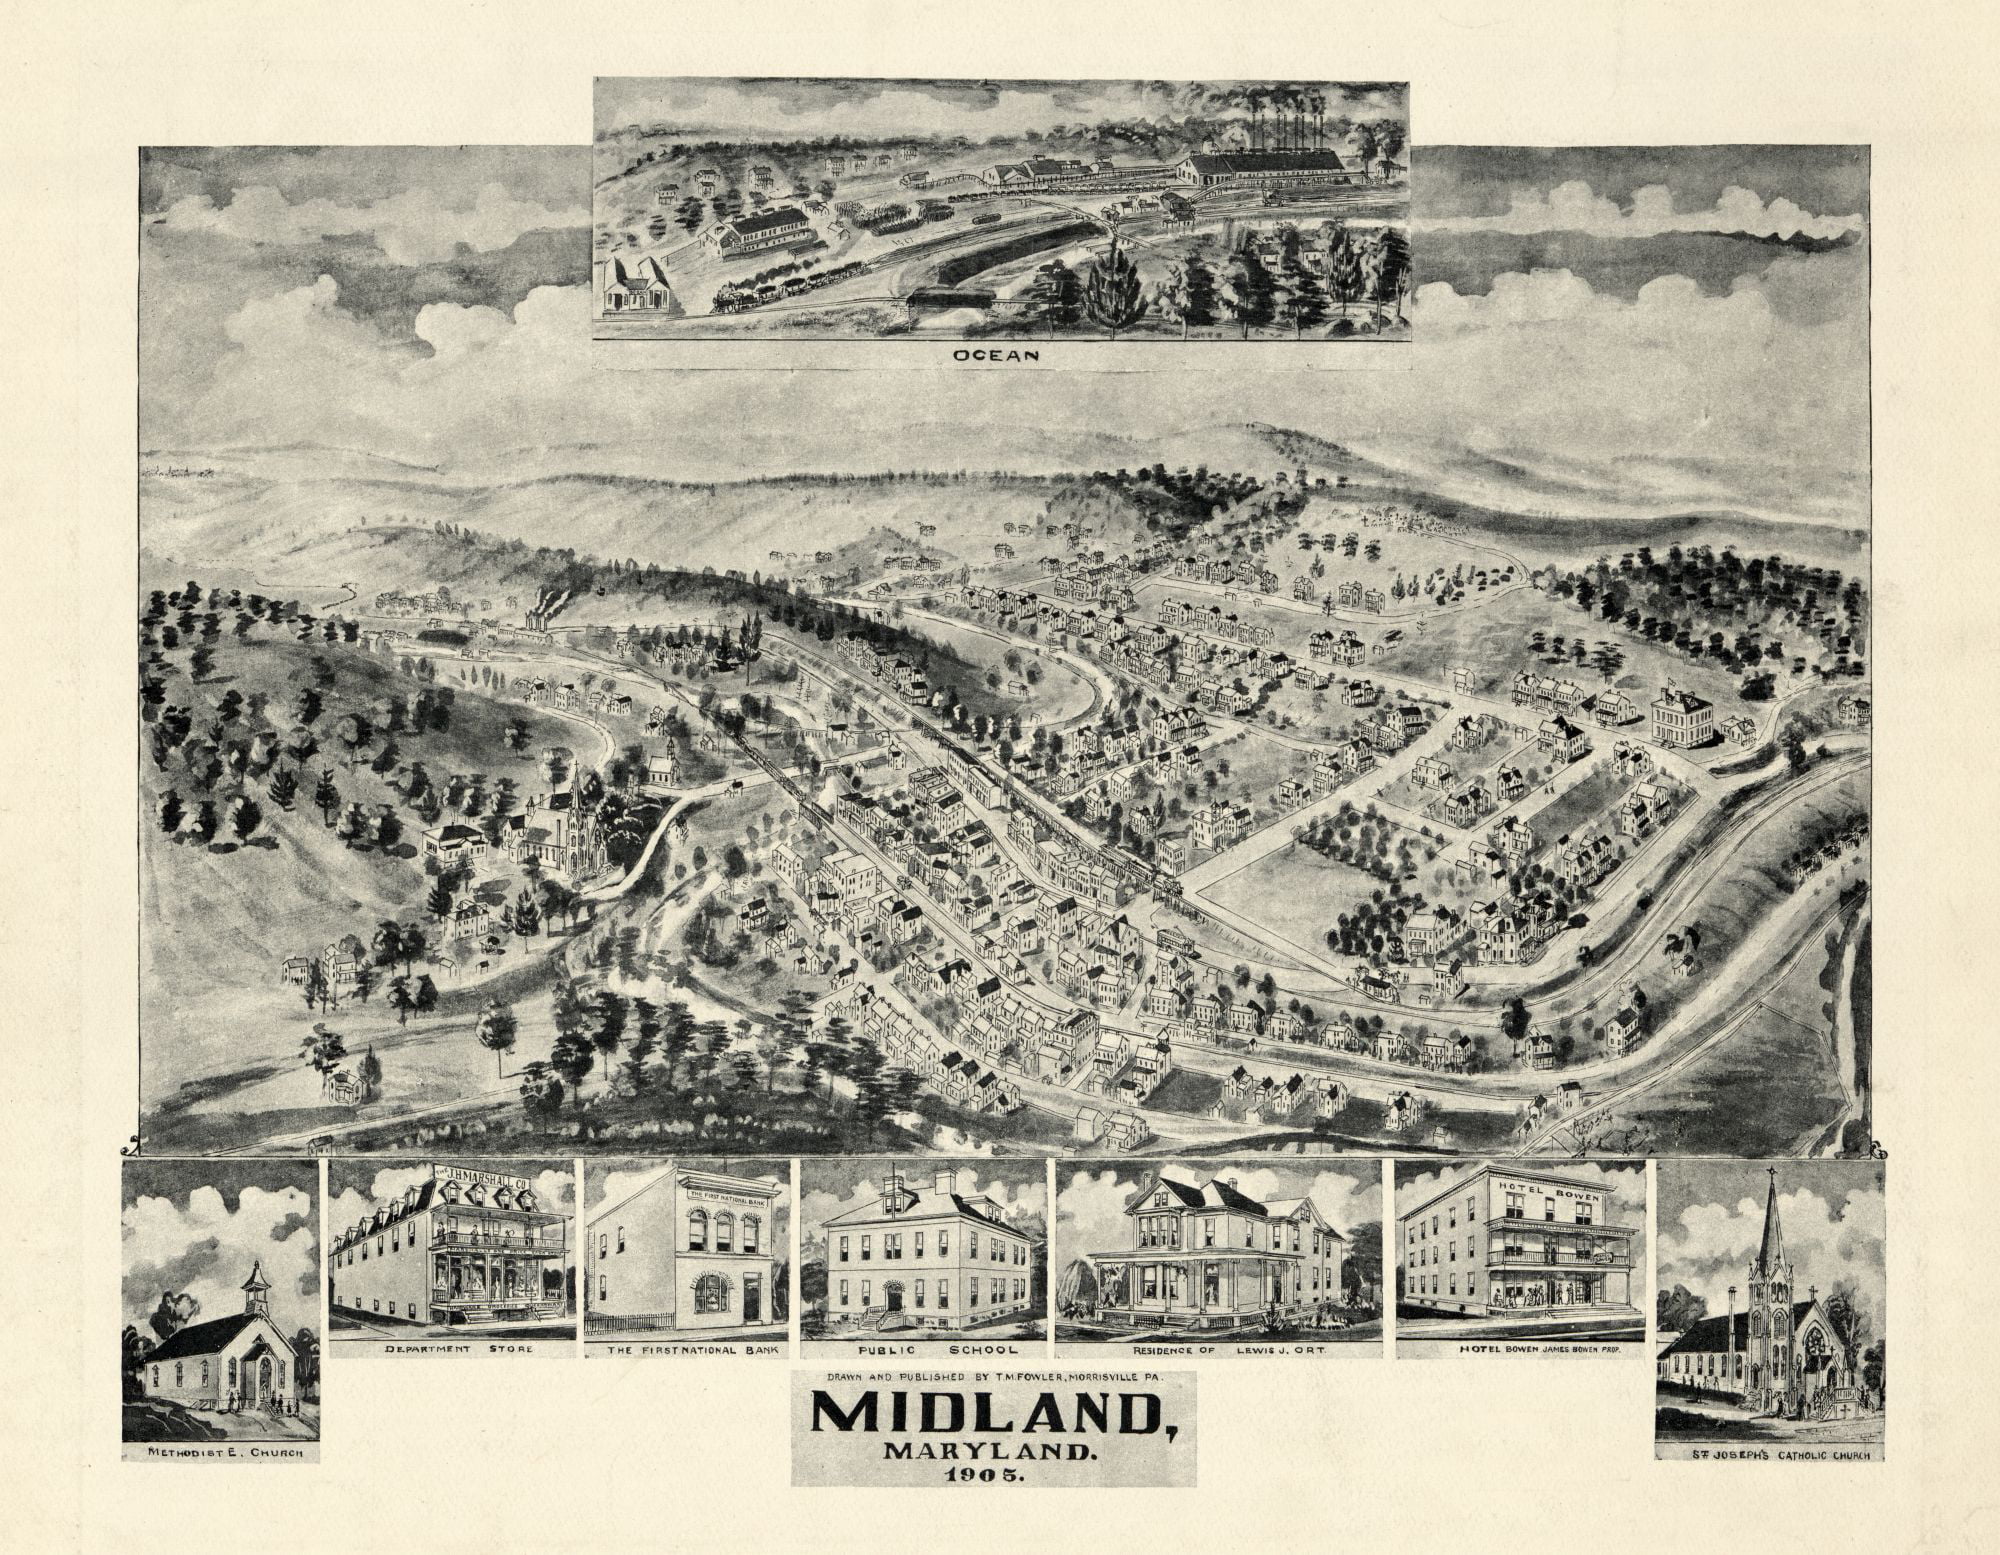 Fowler 1905-23.00 x 29.59 Midland Maryland 